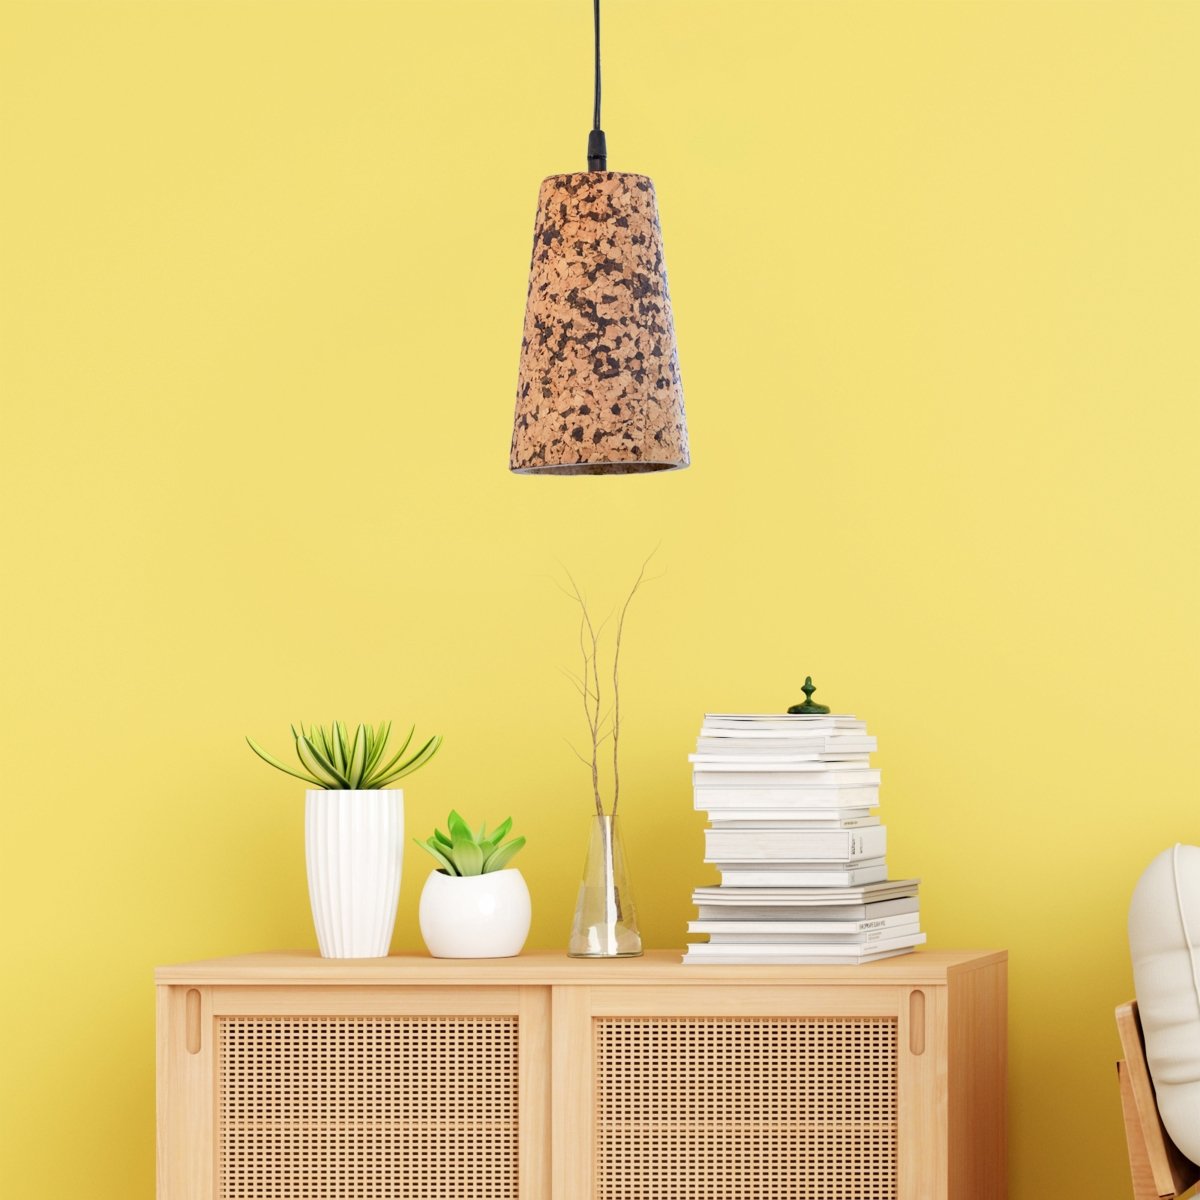 Kezevel Cork Decorative Hanging Light - Natural Cork Brown Conical Pendant Light for Living Room, Balcony, Foyer and Bedroom